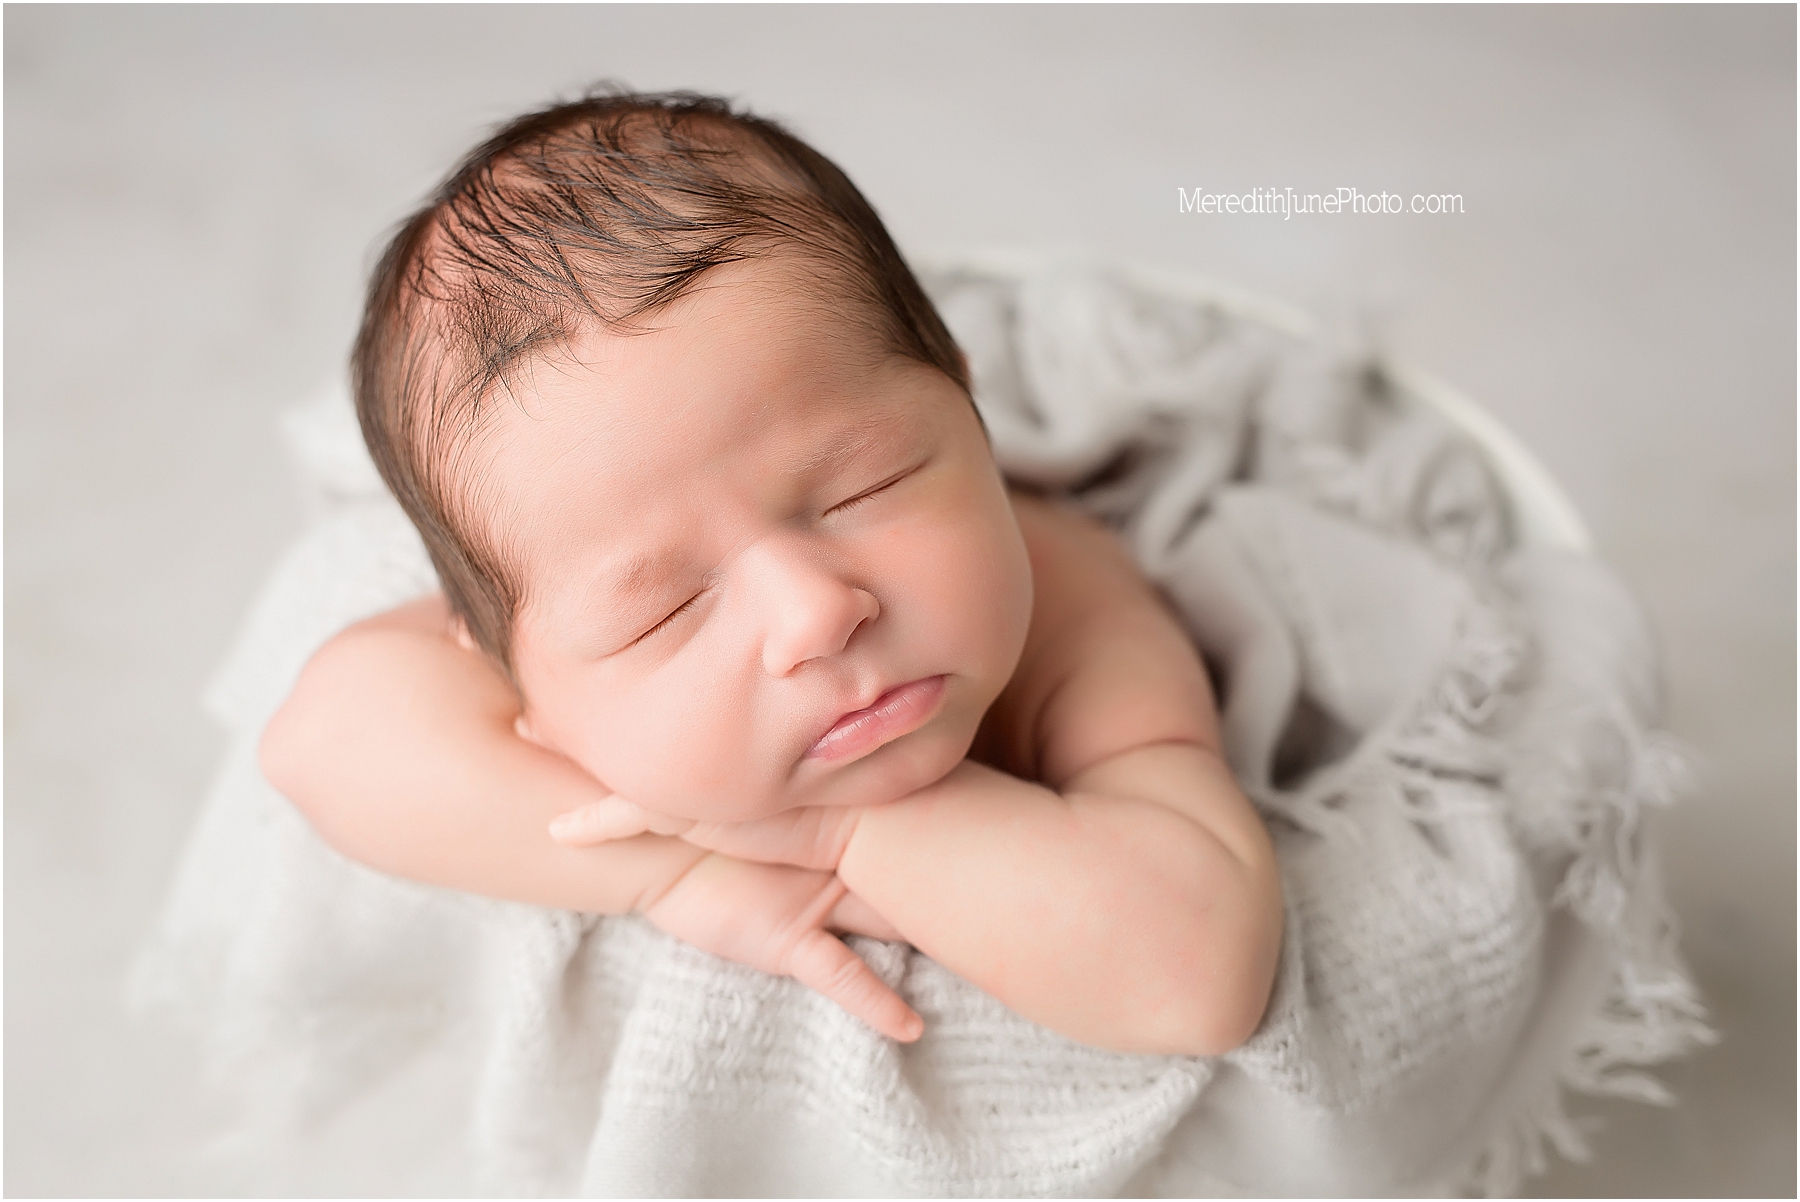 Baby Hayes at Meredith June Photography